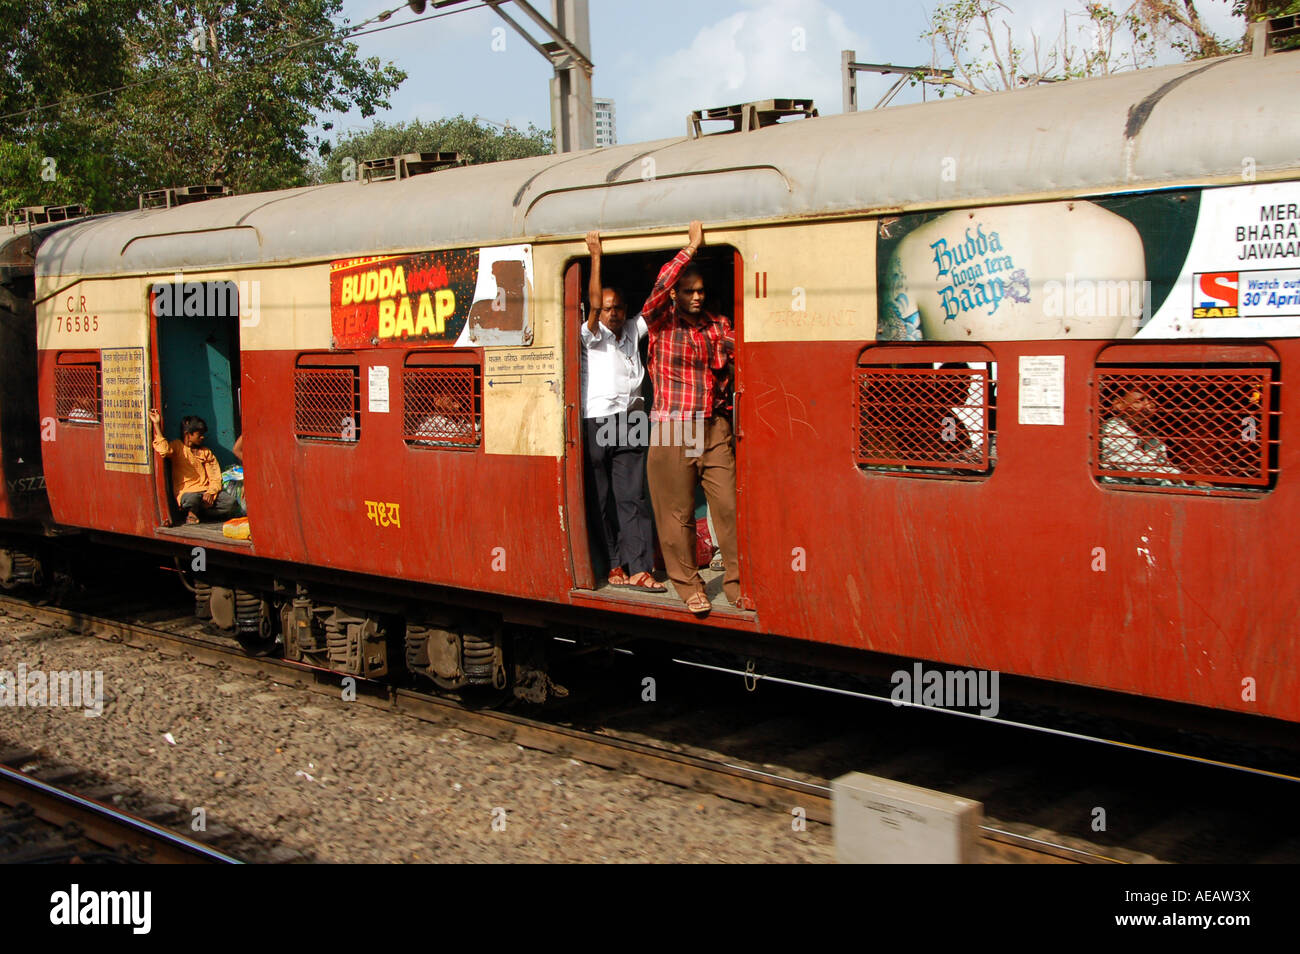 People on Indian train carriage in Mumbai / Bombay, India Stock Photo